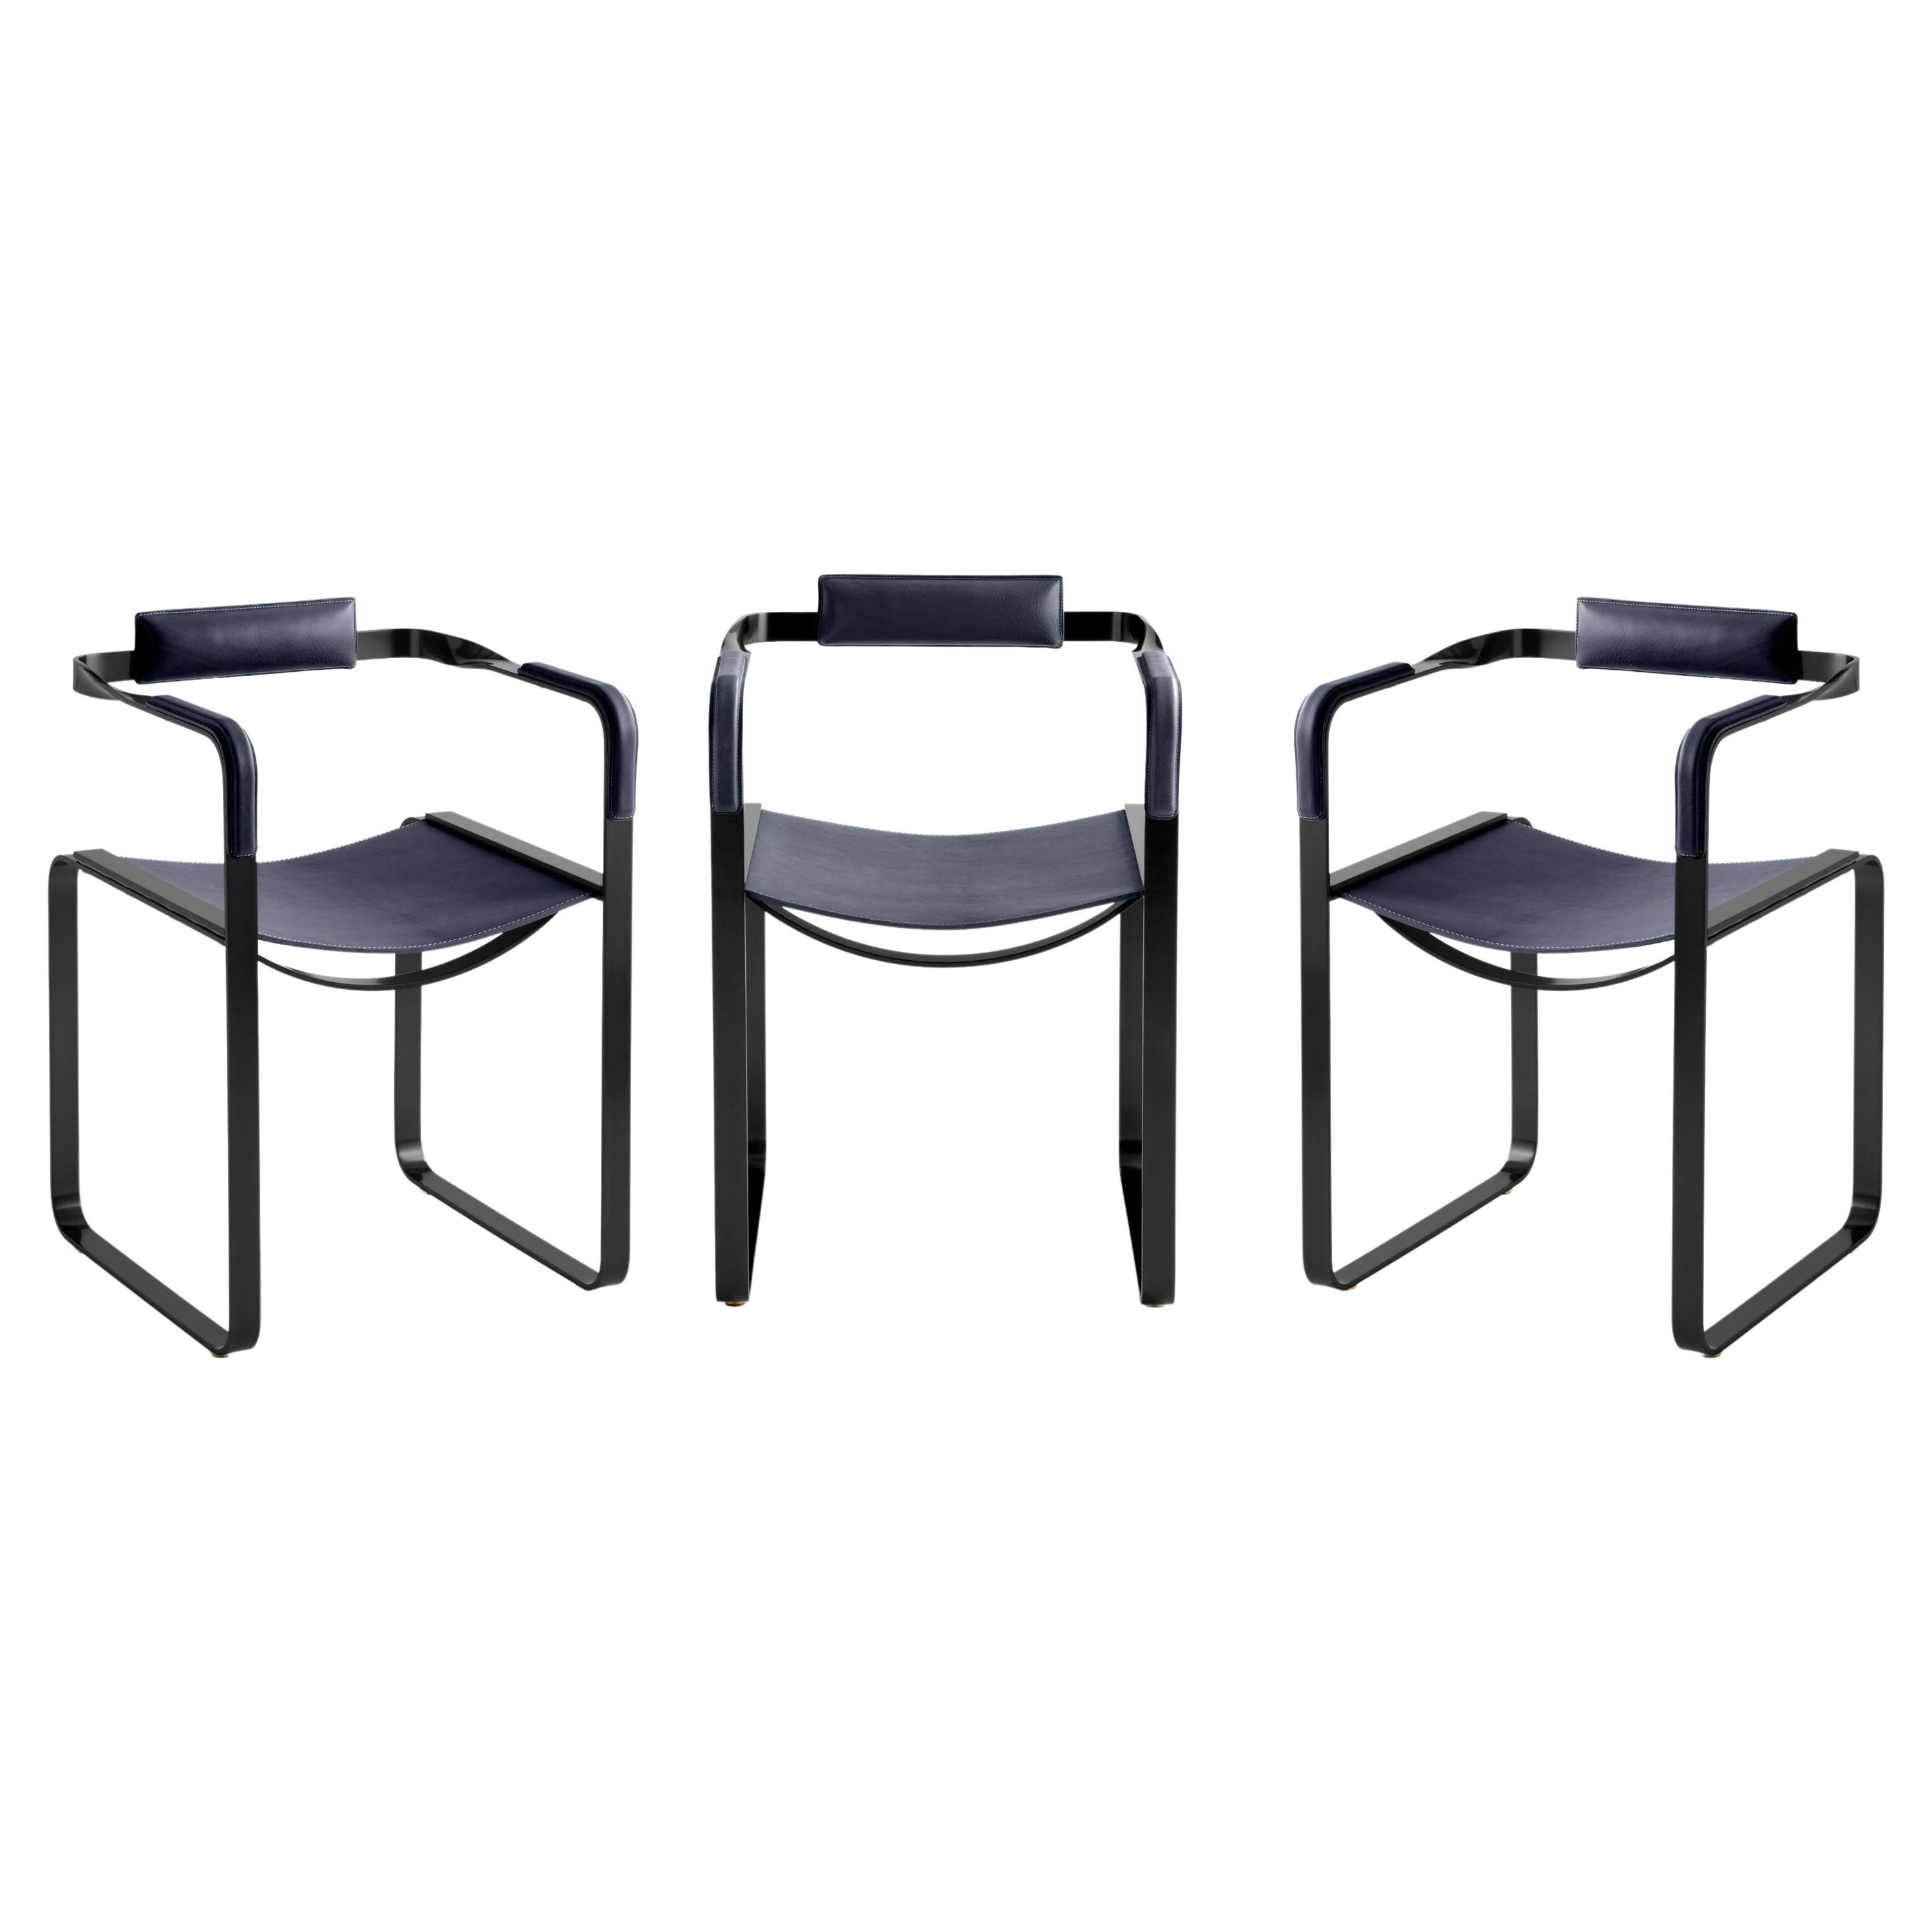 Set of 3 Armchair, Black Smoke Steel & Blue Navy Saddle, Contemporary Style